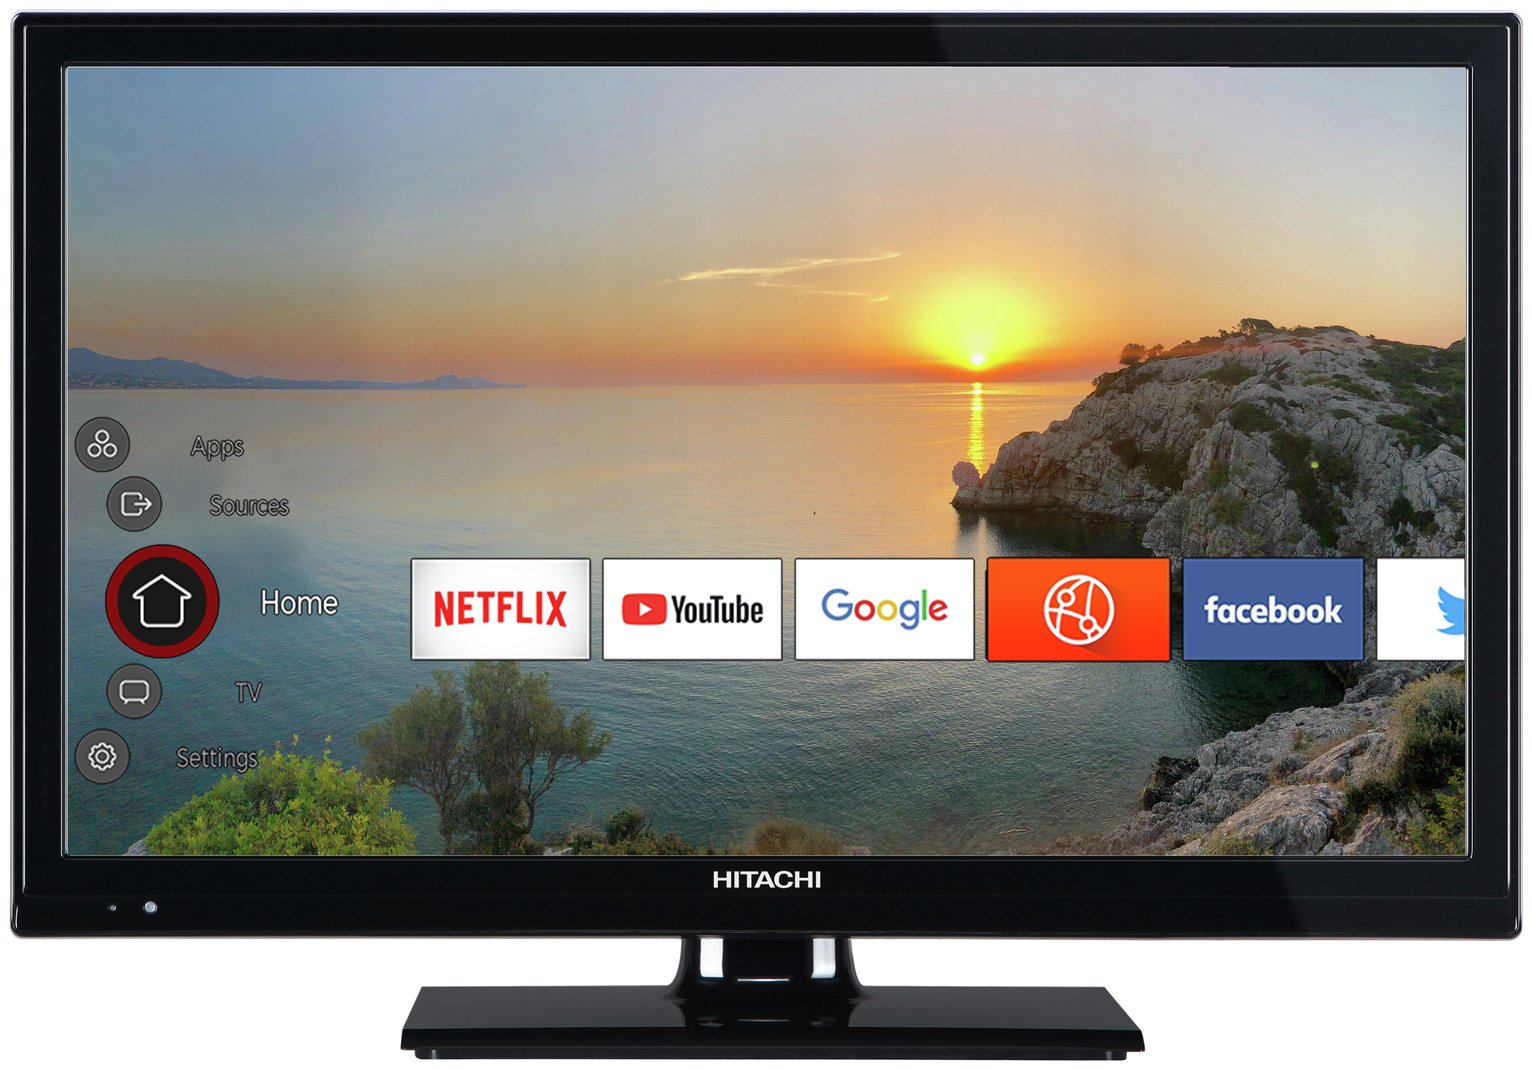 Hitachi 24 Inch Smart HD Ready TV review